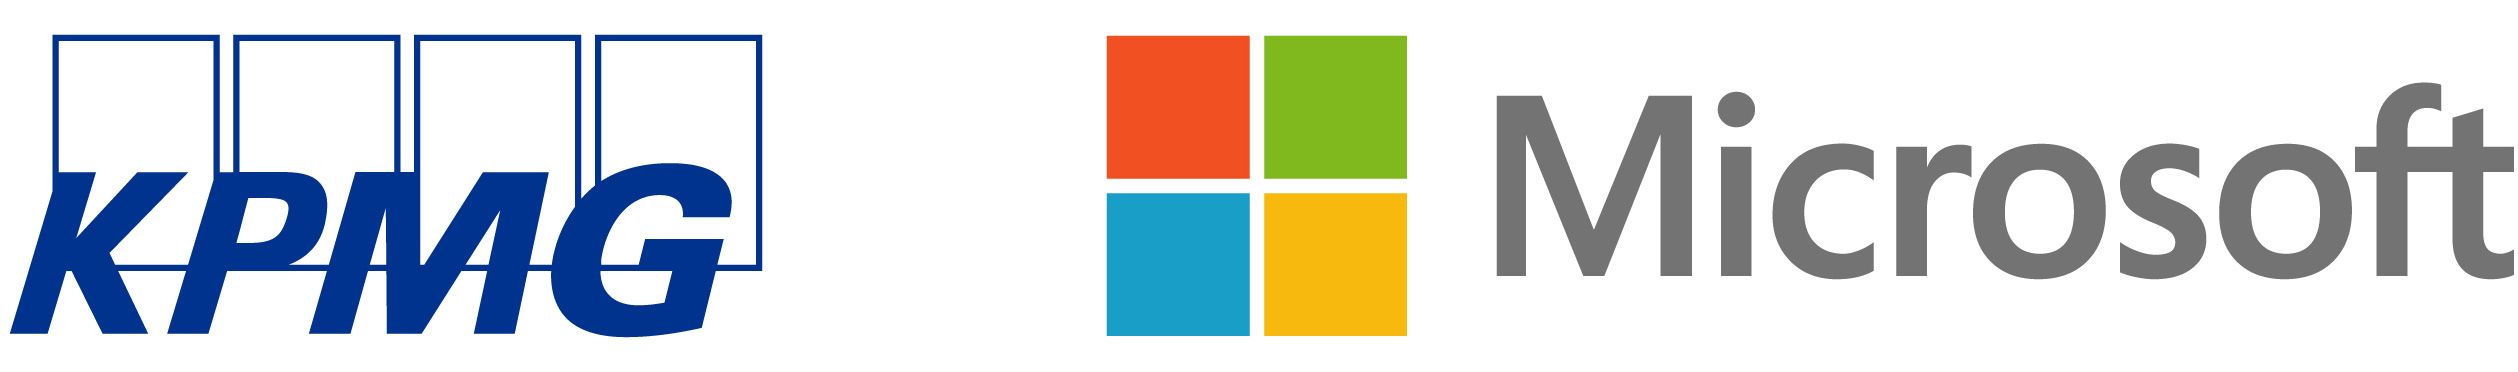 Microsoft and KPMG logos